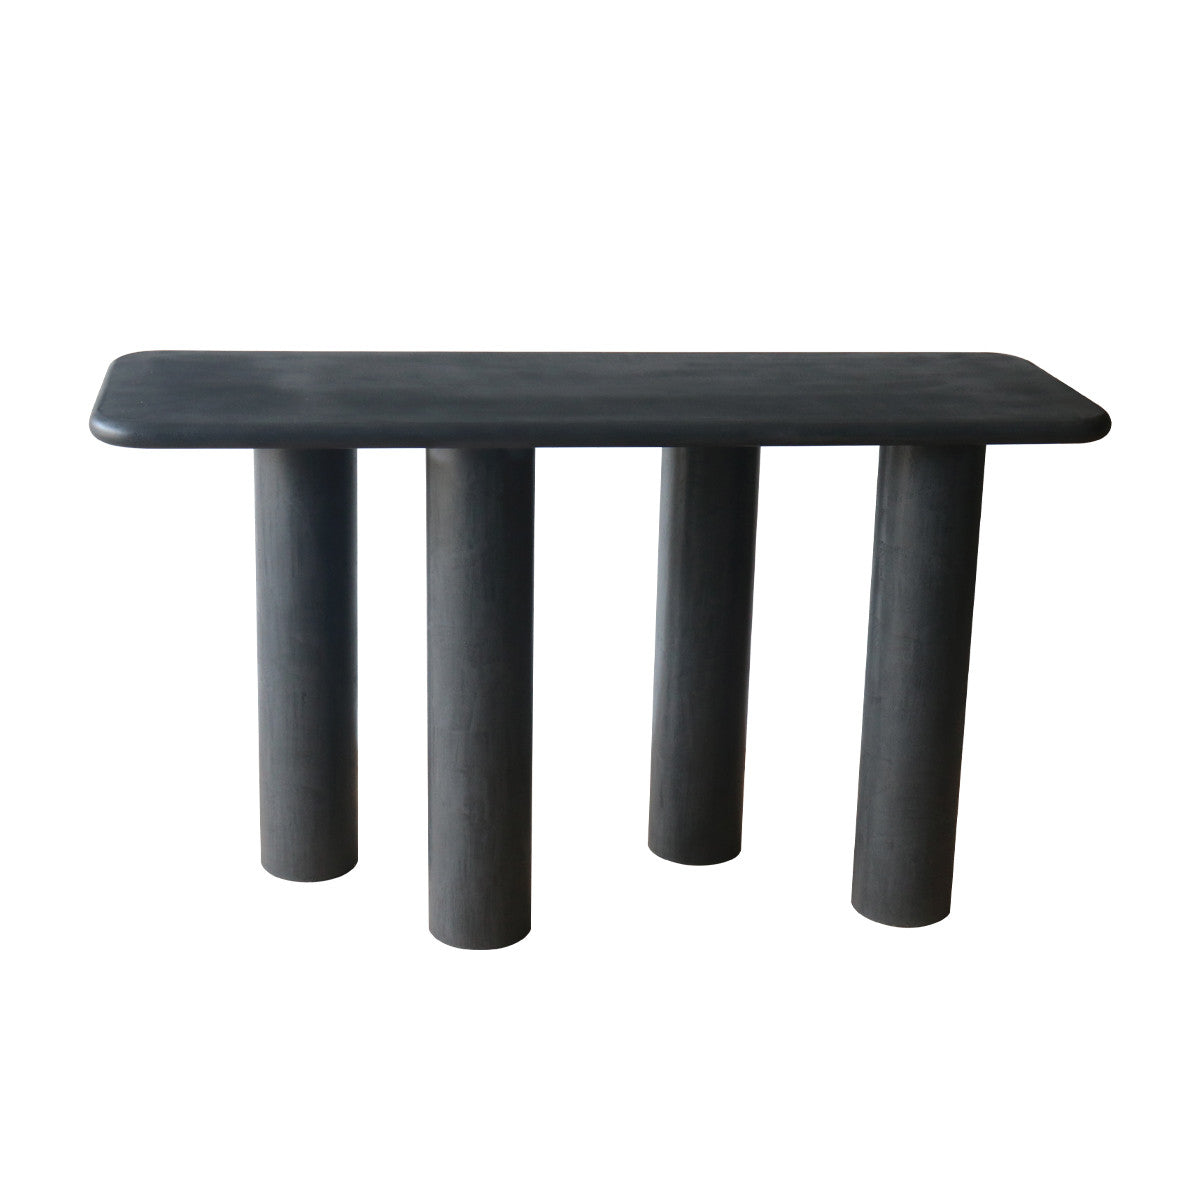 Pim Console table, Black Color - Pim  طاولة كونسول, لون أسود